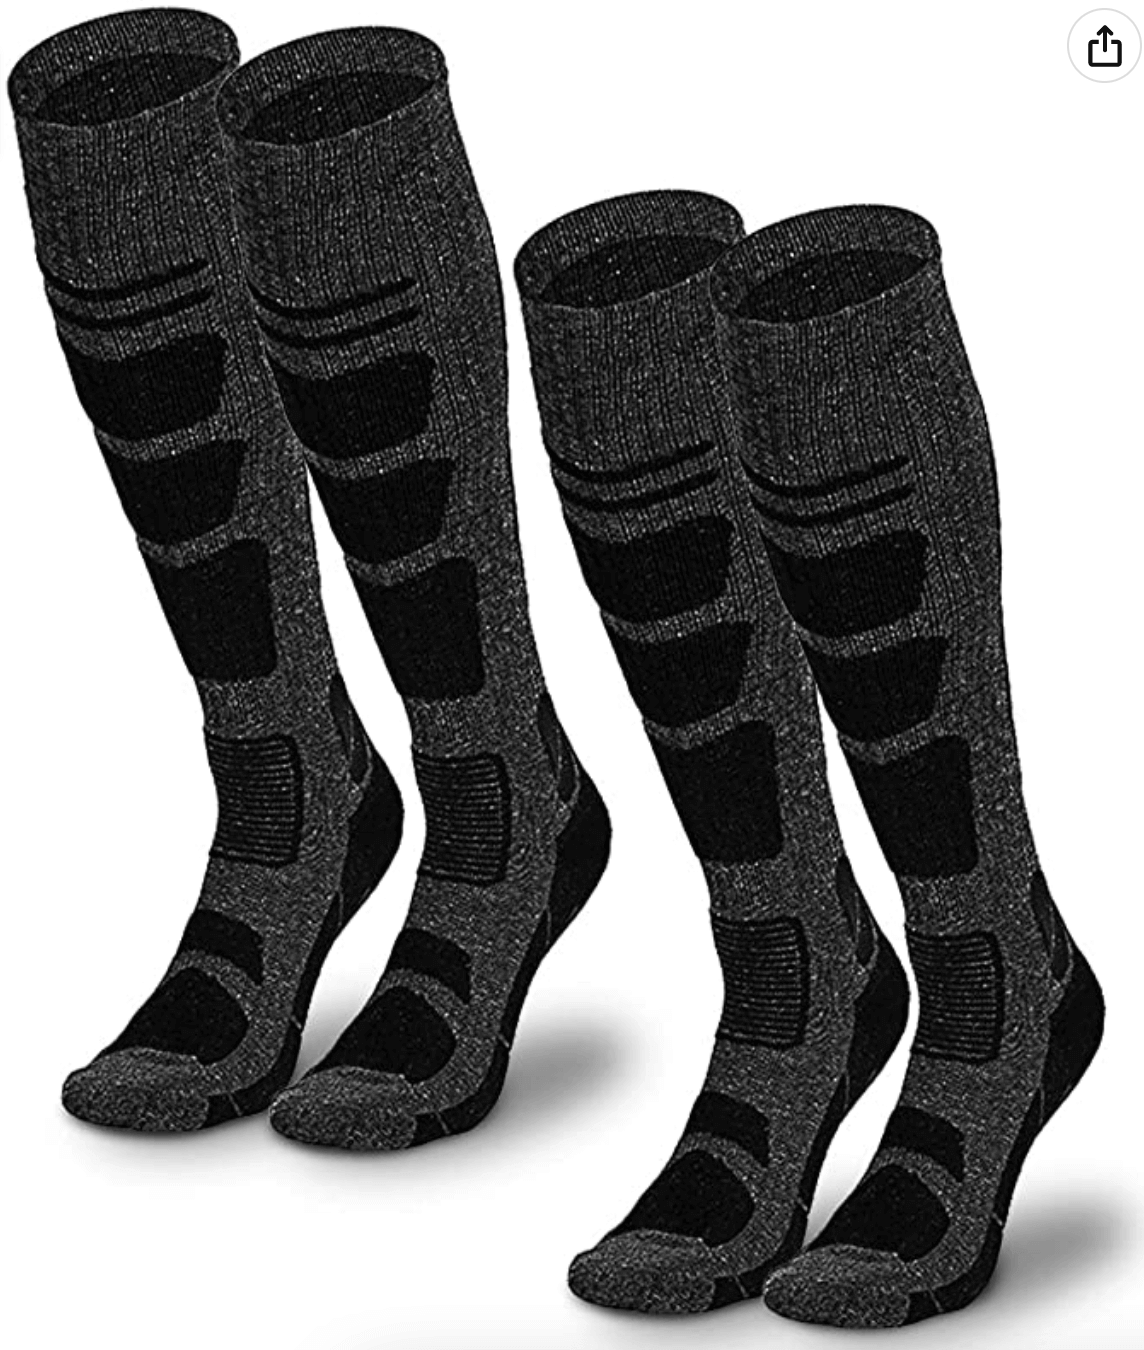 Wool Ski Socks